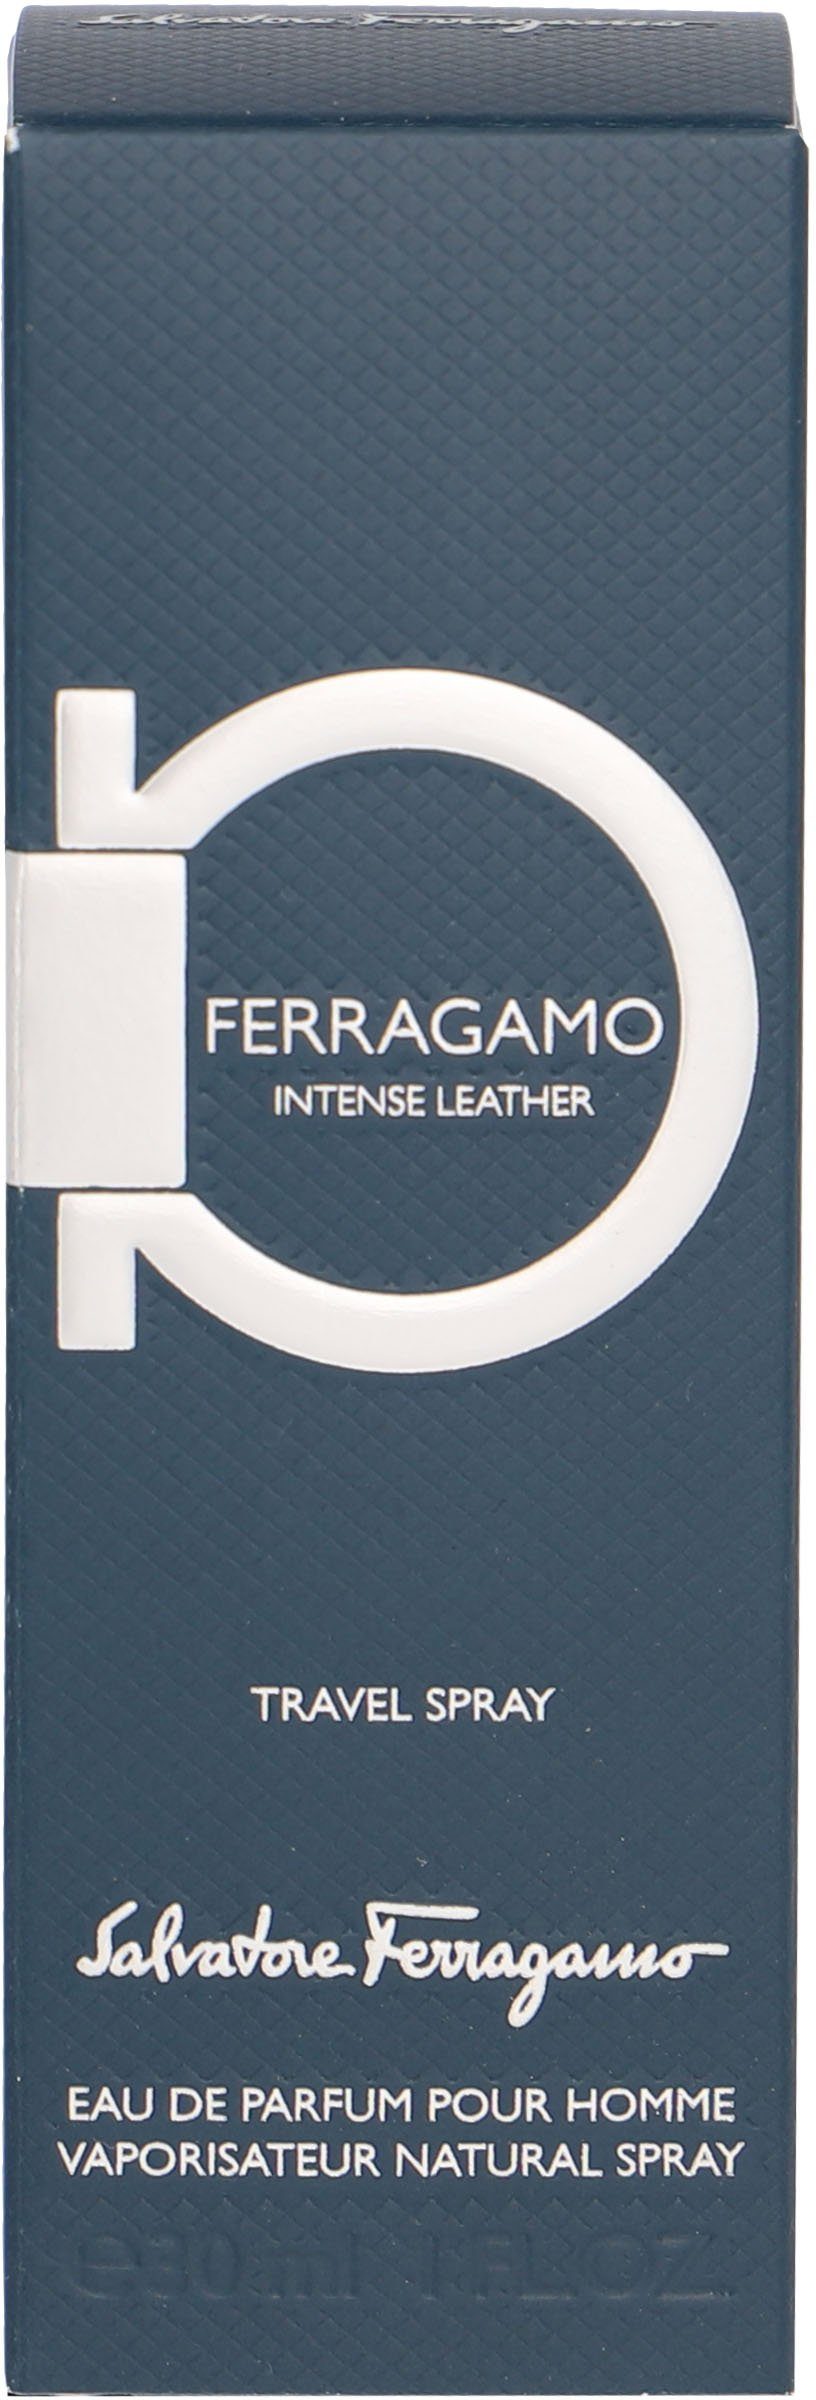 Salvatore Ferragamo Eau de Intense Parfum Leather